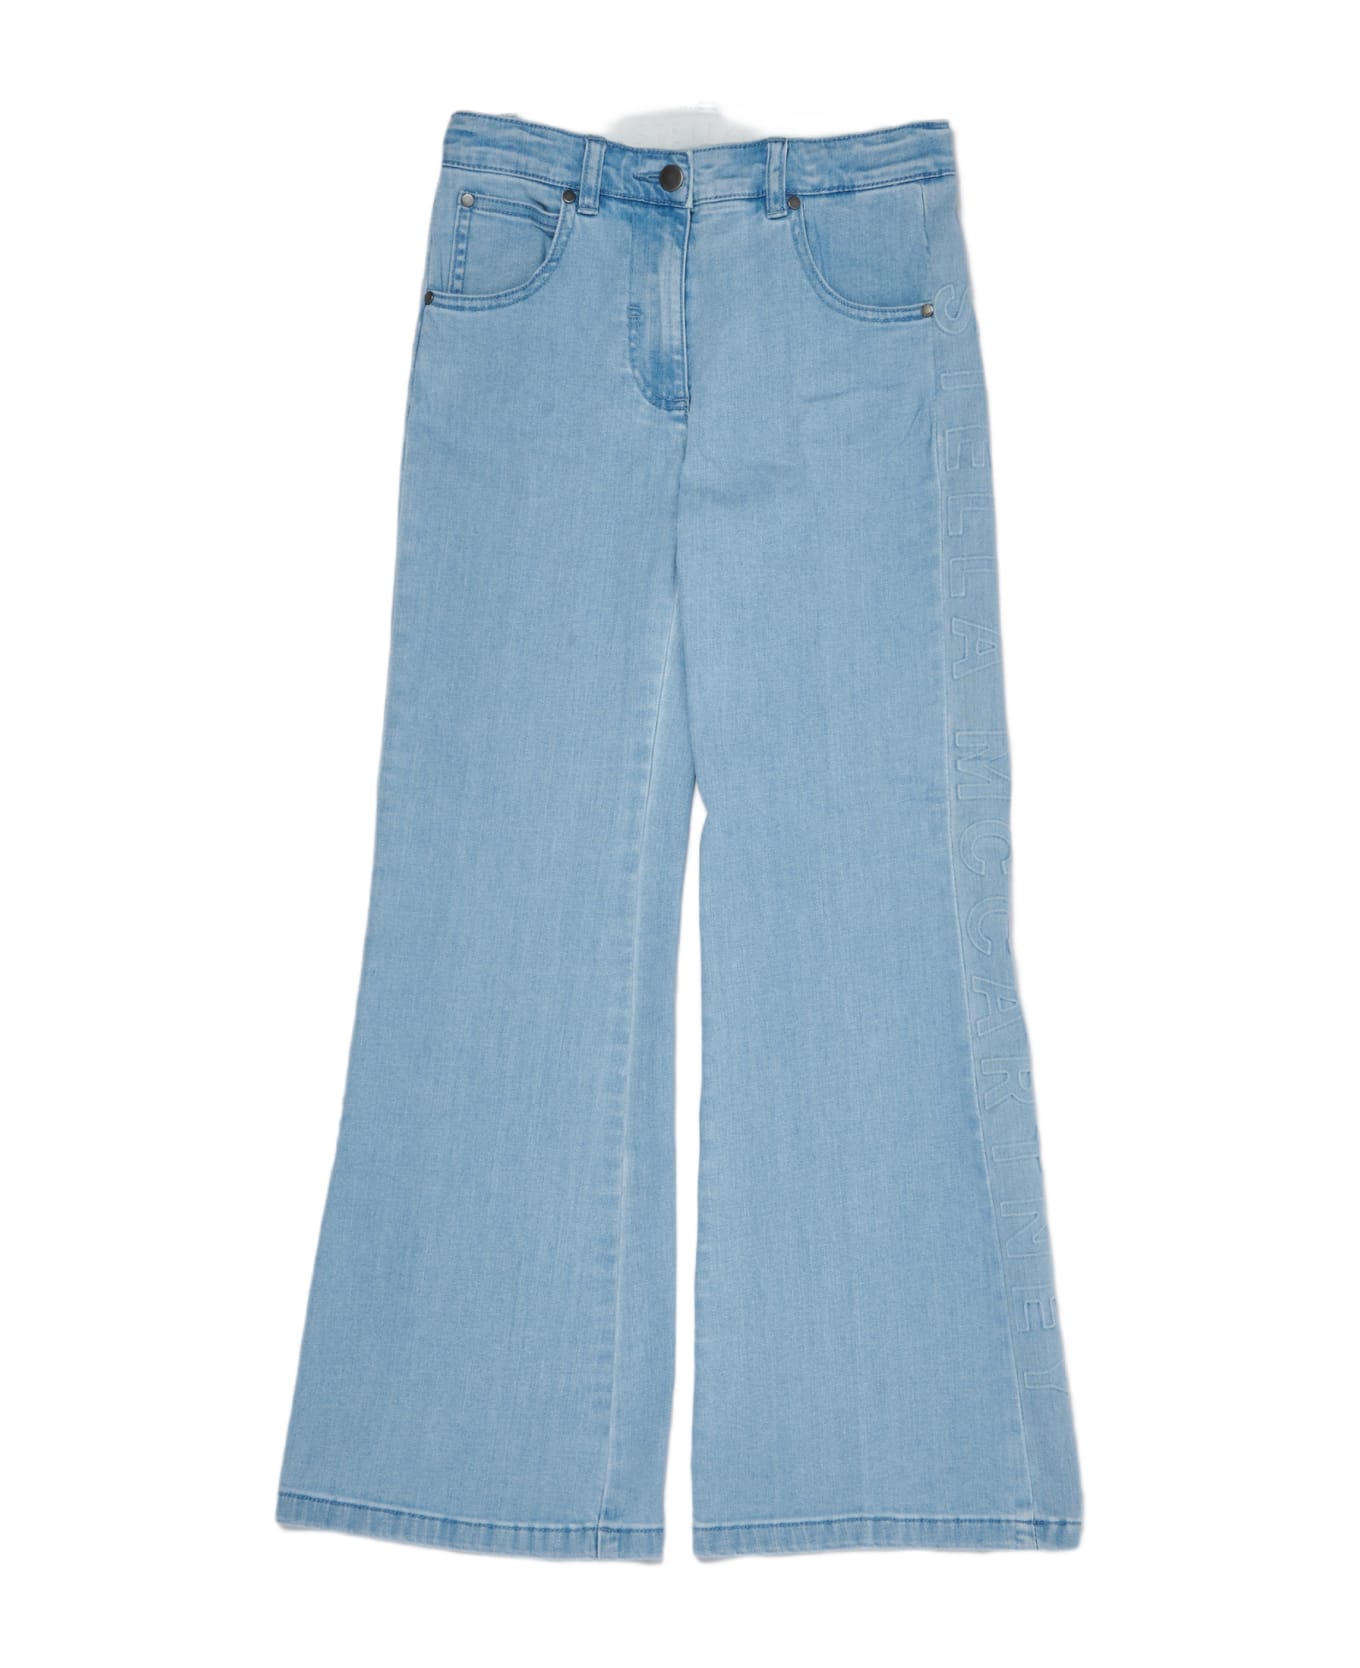 Stella McCartney Jeans Jeans - DENIM CHIARO